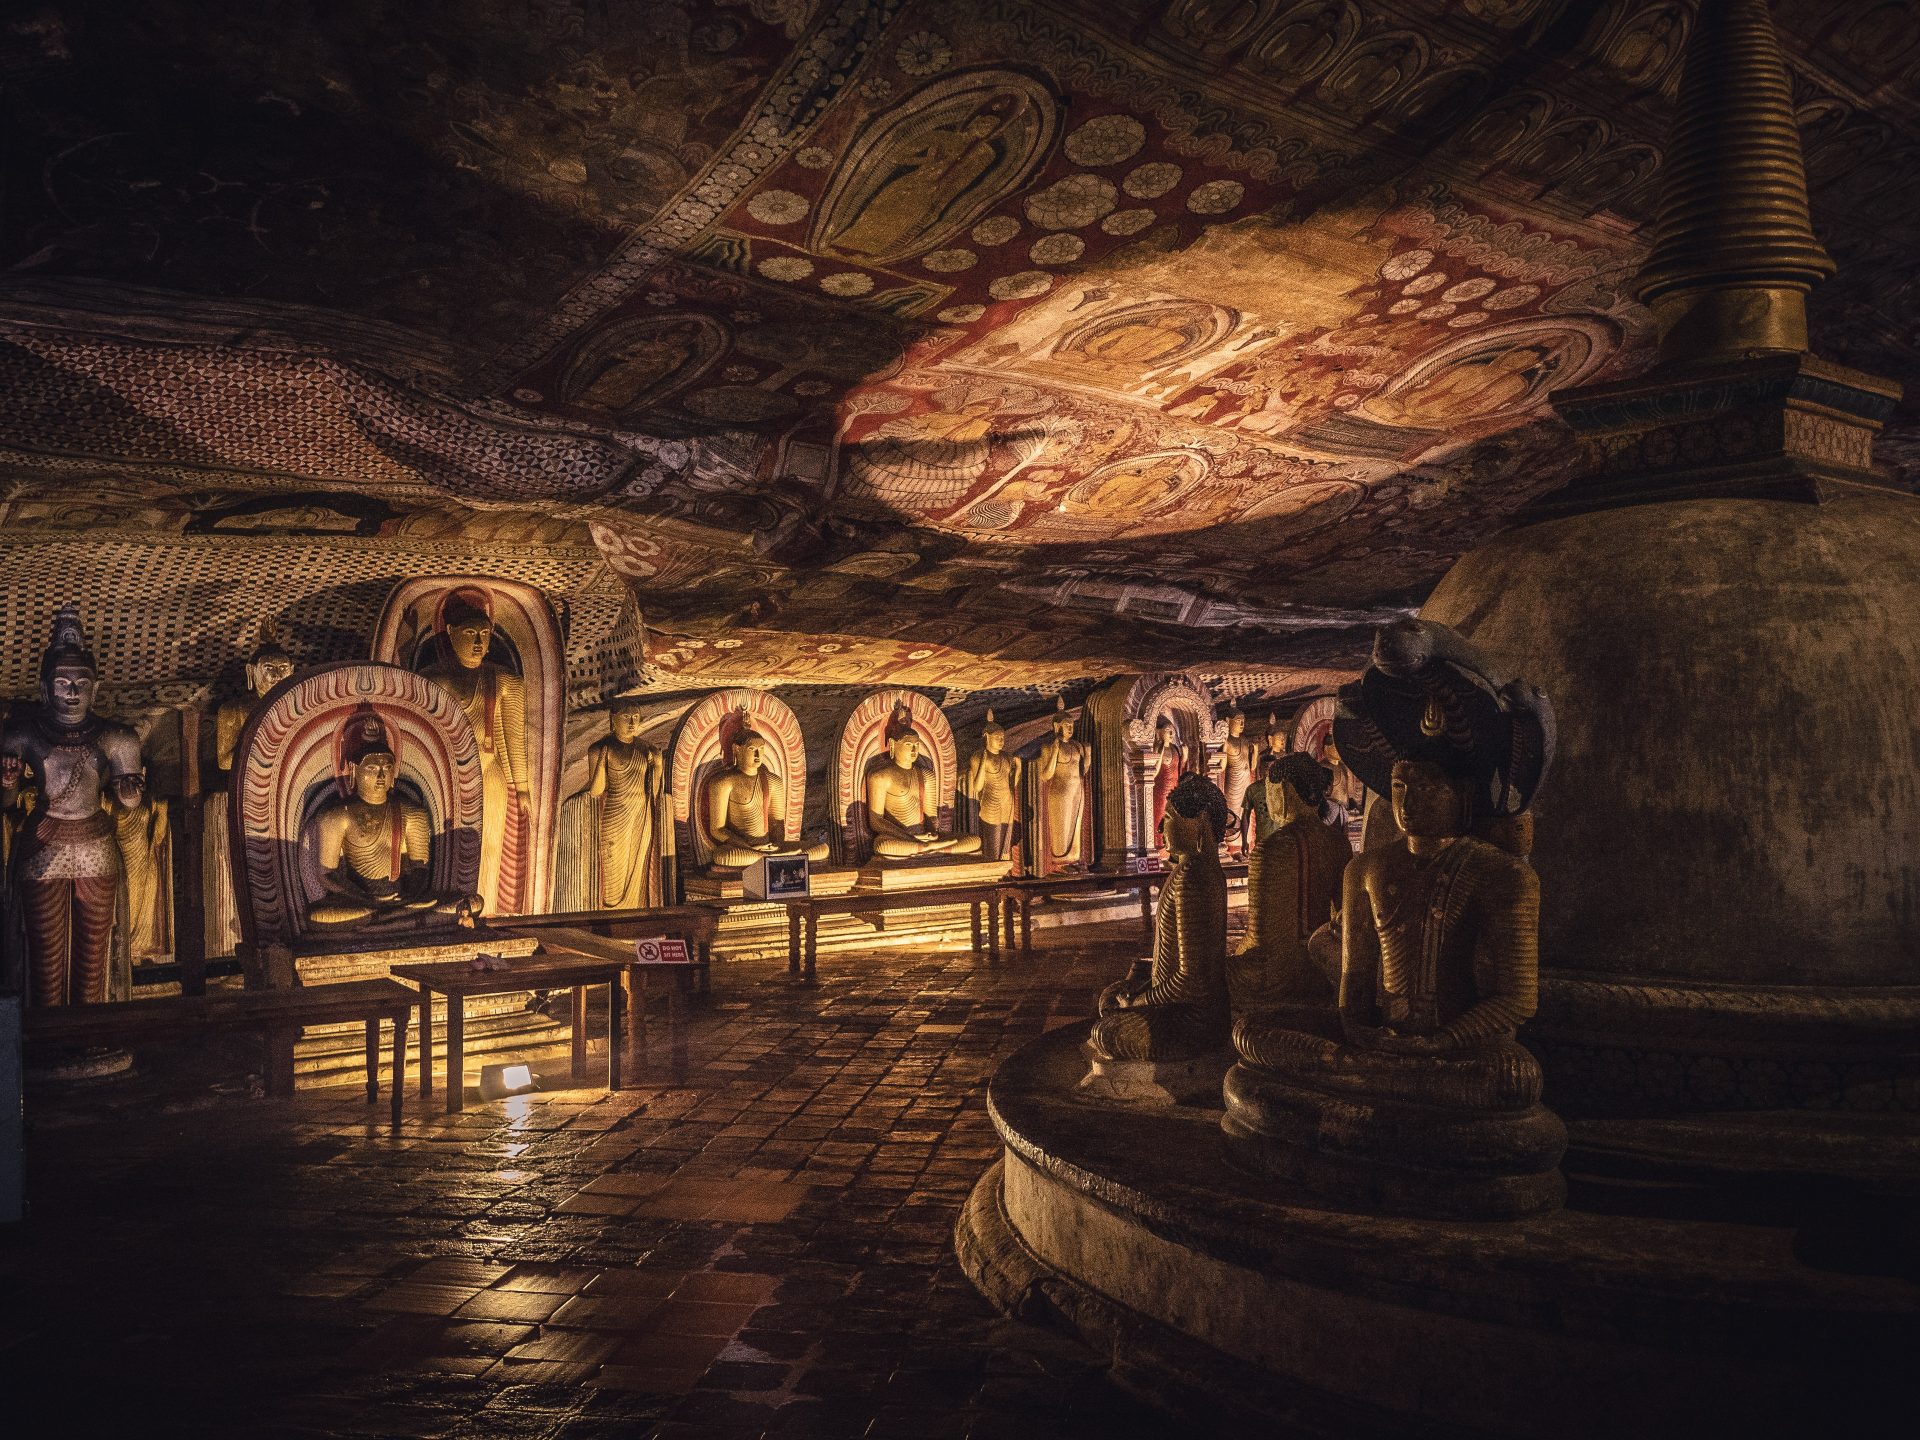 Temple d'or de dambulla au Sri Lanka - grotte sacrée